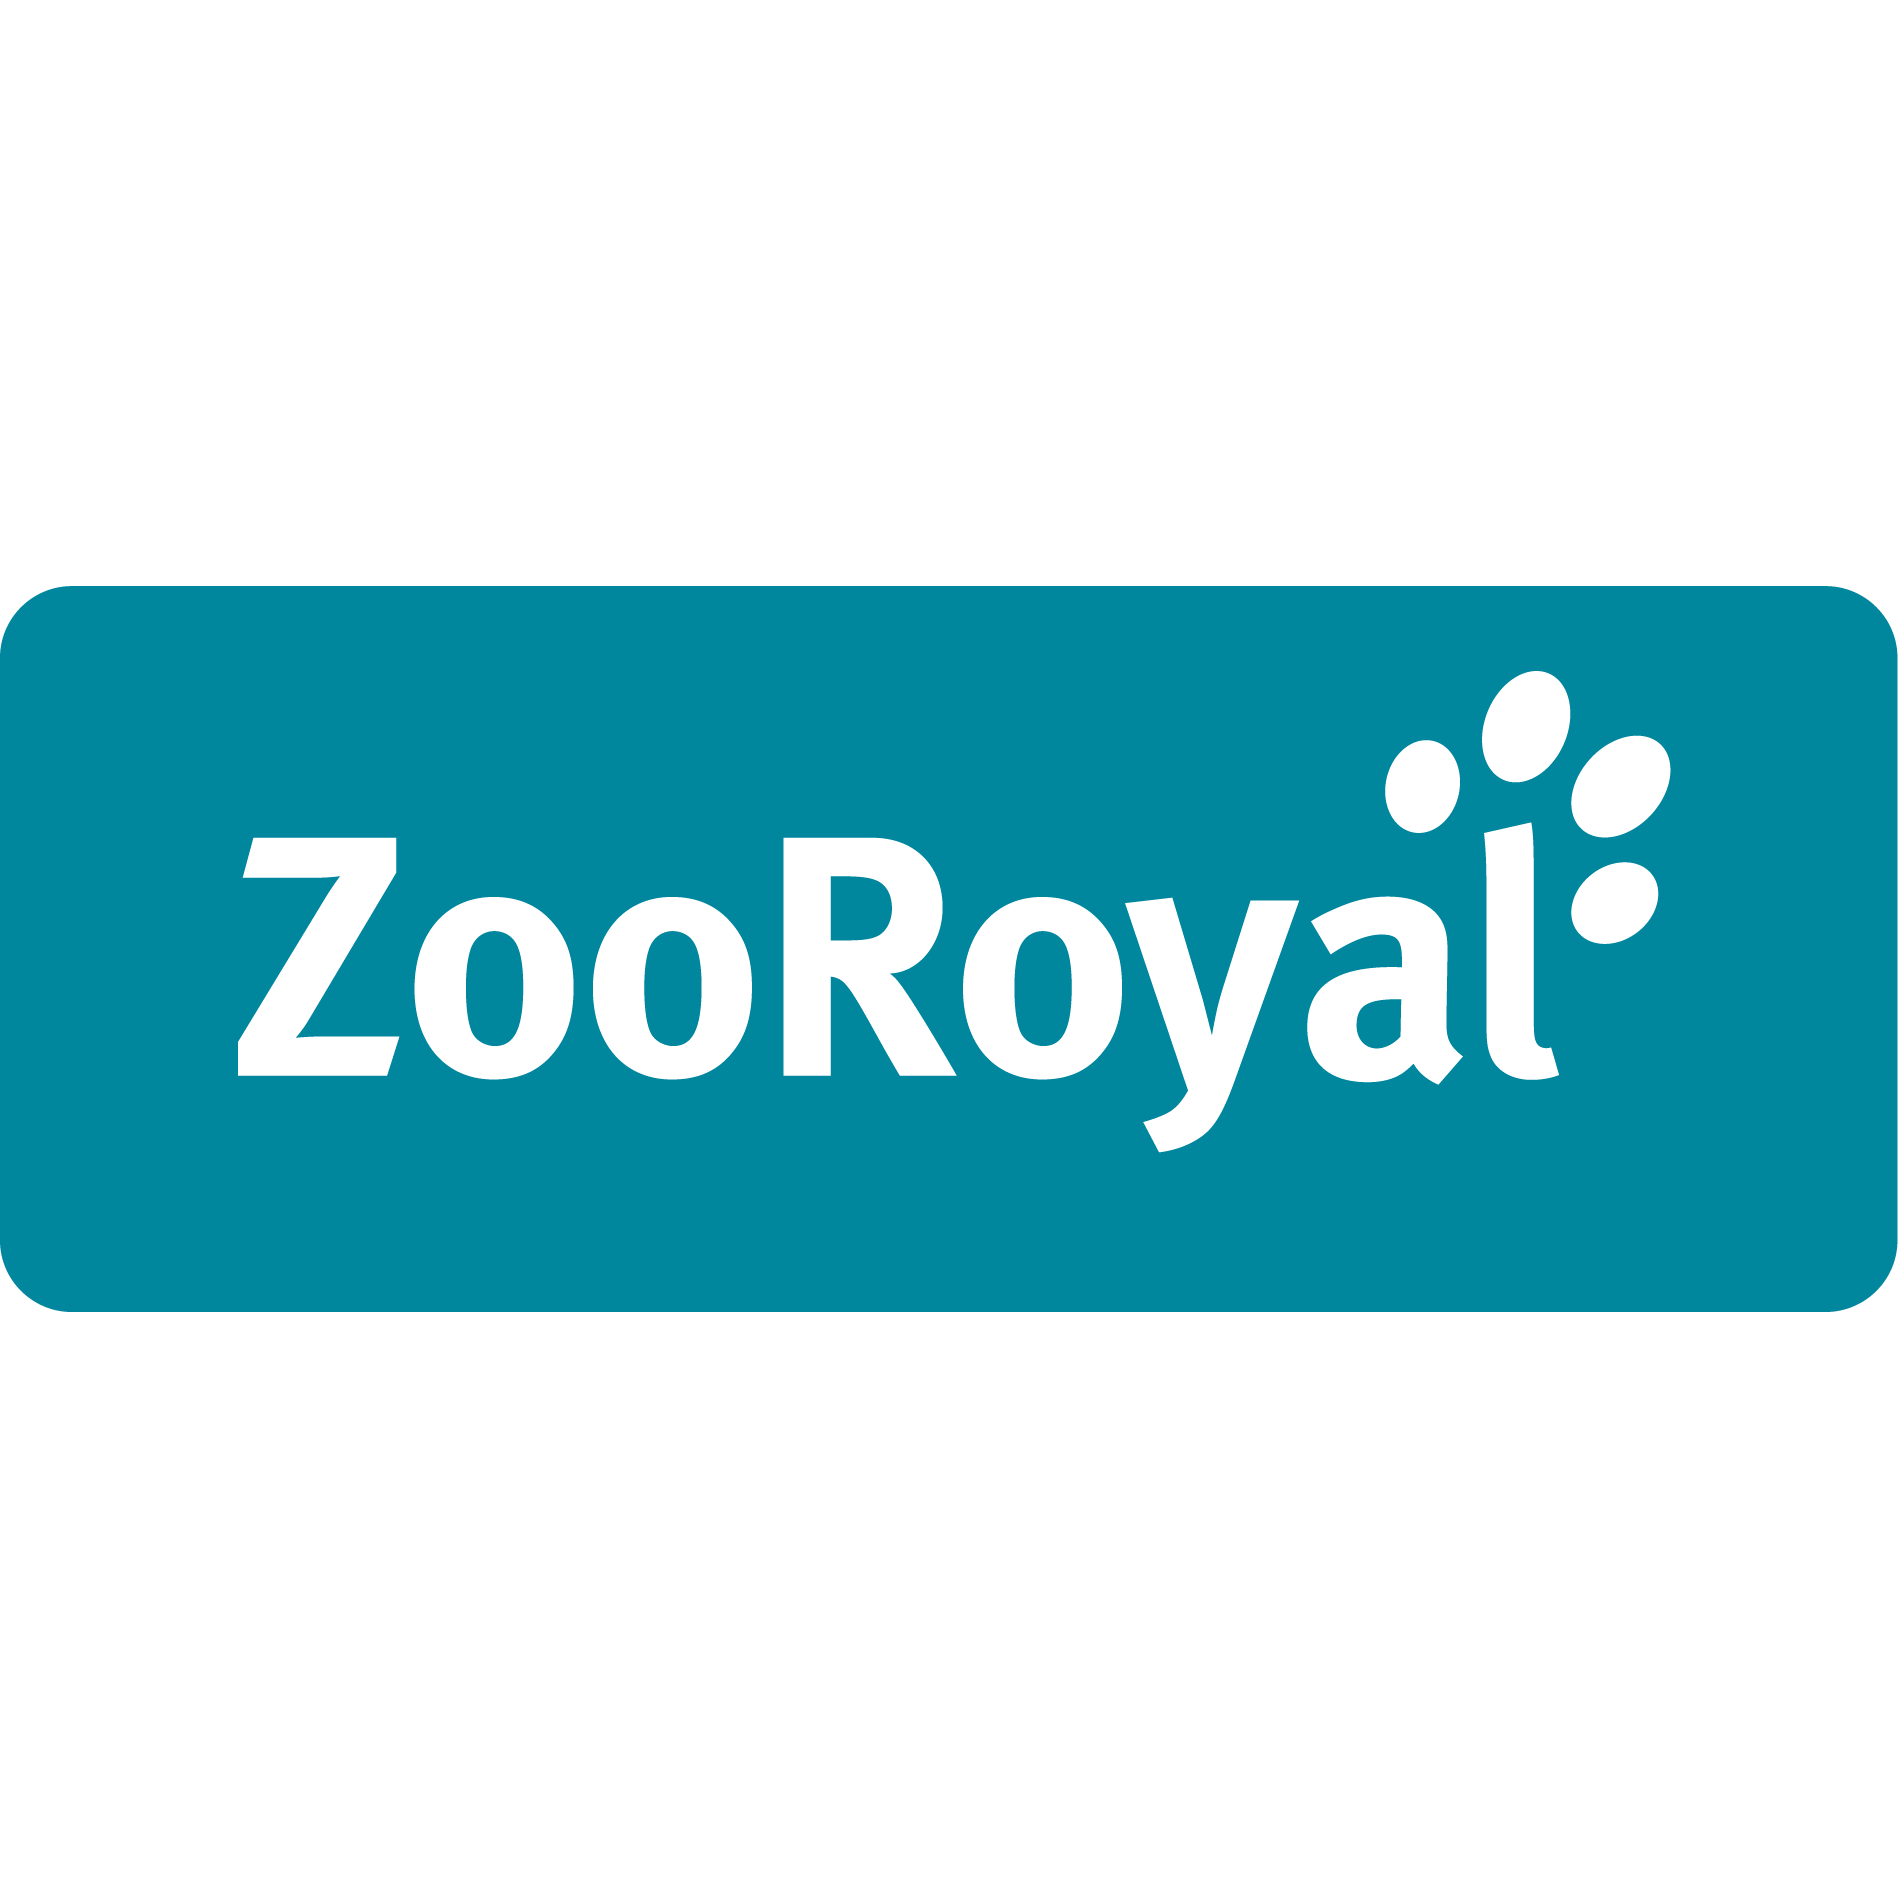 ZooRoyal in Hamburg - Logo